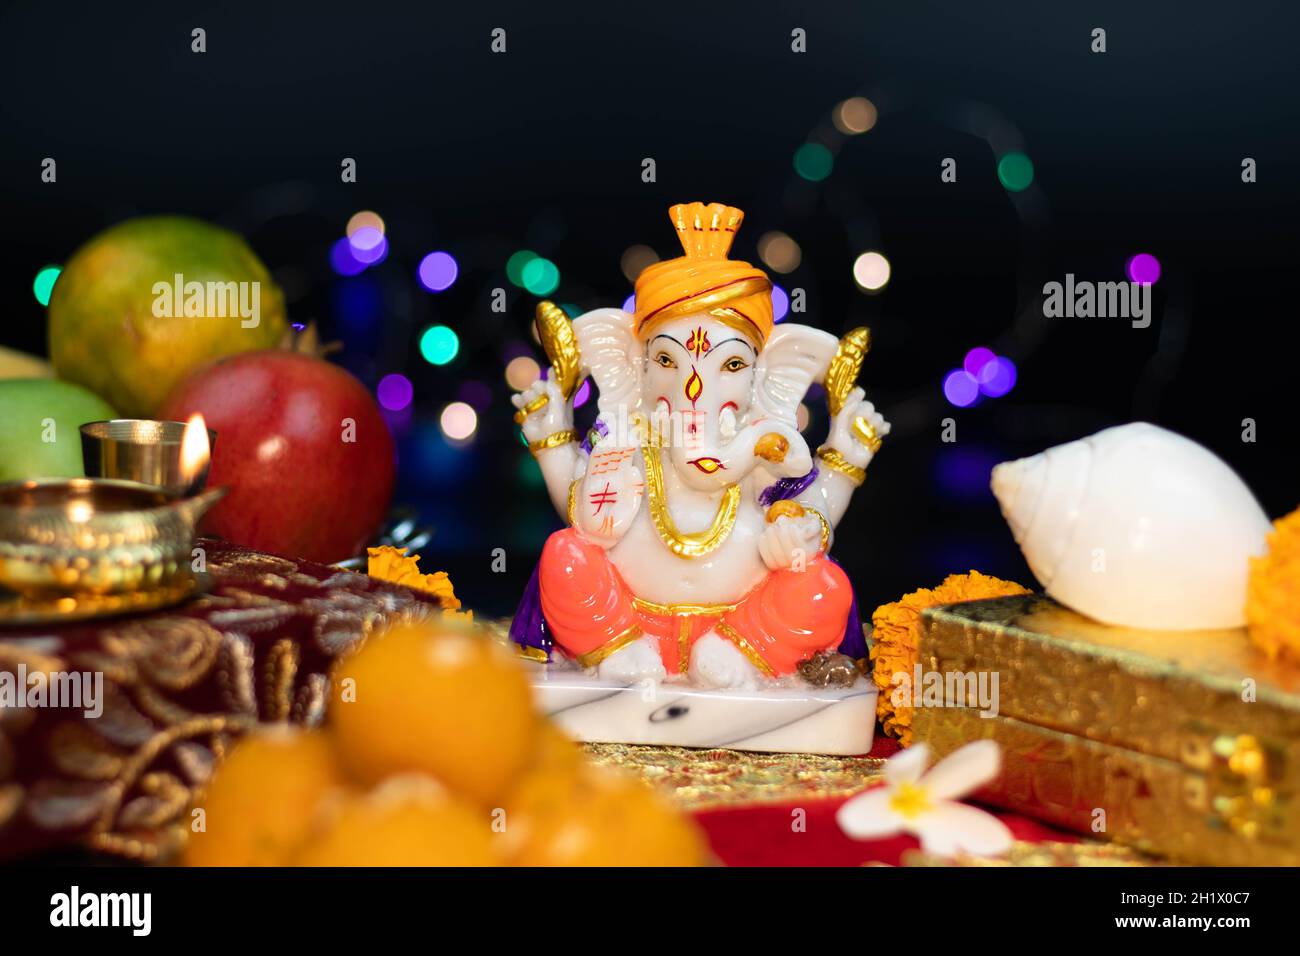 Closeup Of Hindu God Ganesha Ganpati Bappa Morya In Sitting Pose ...